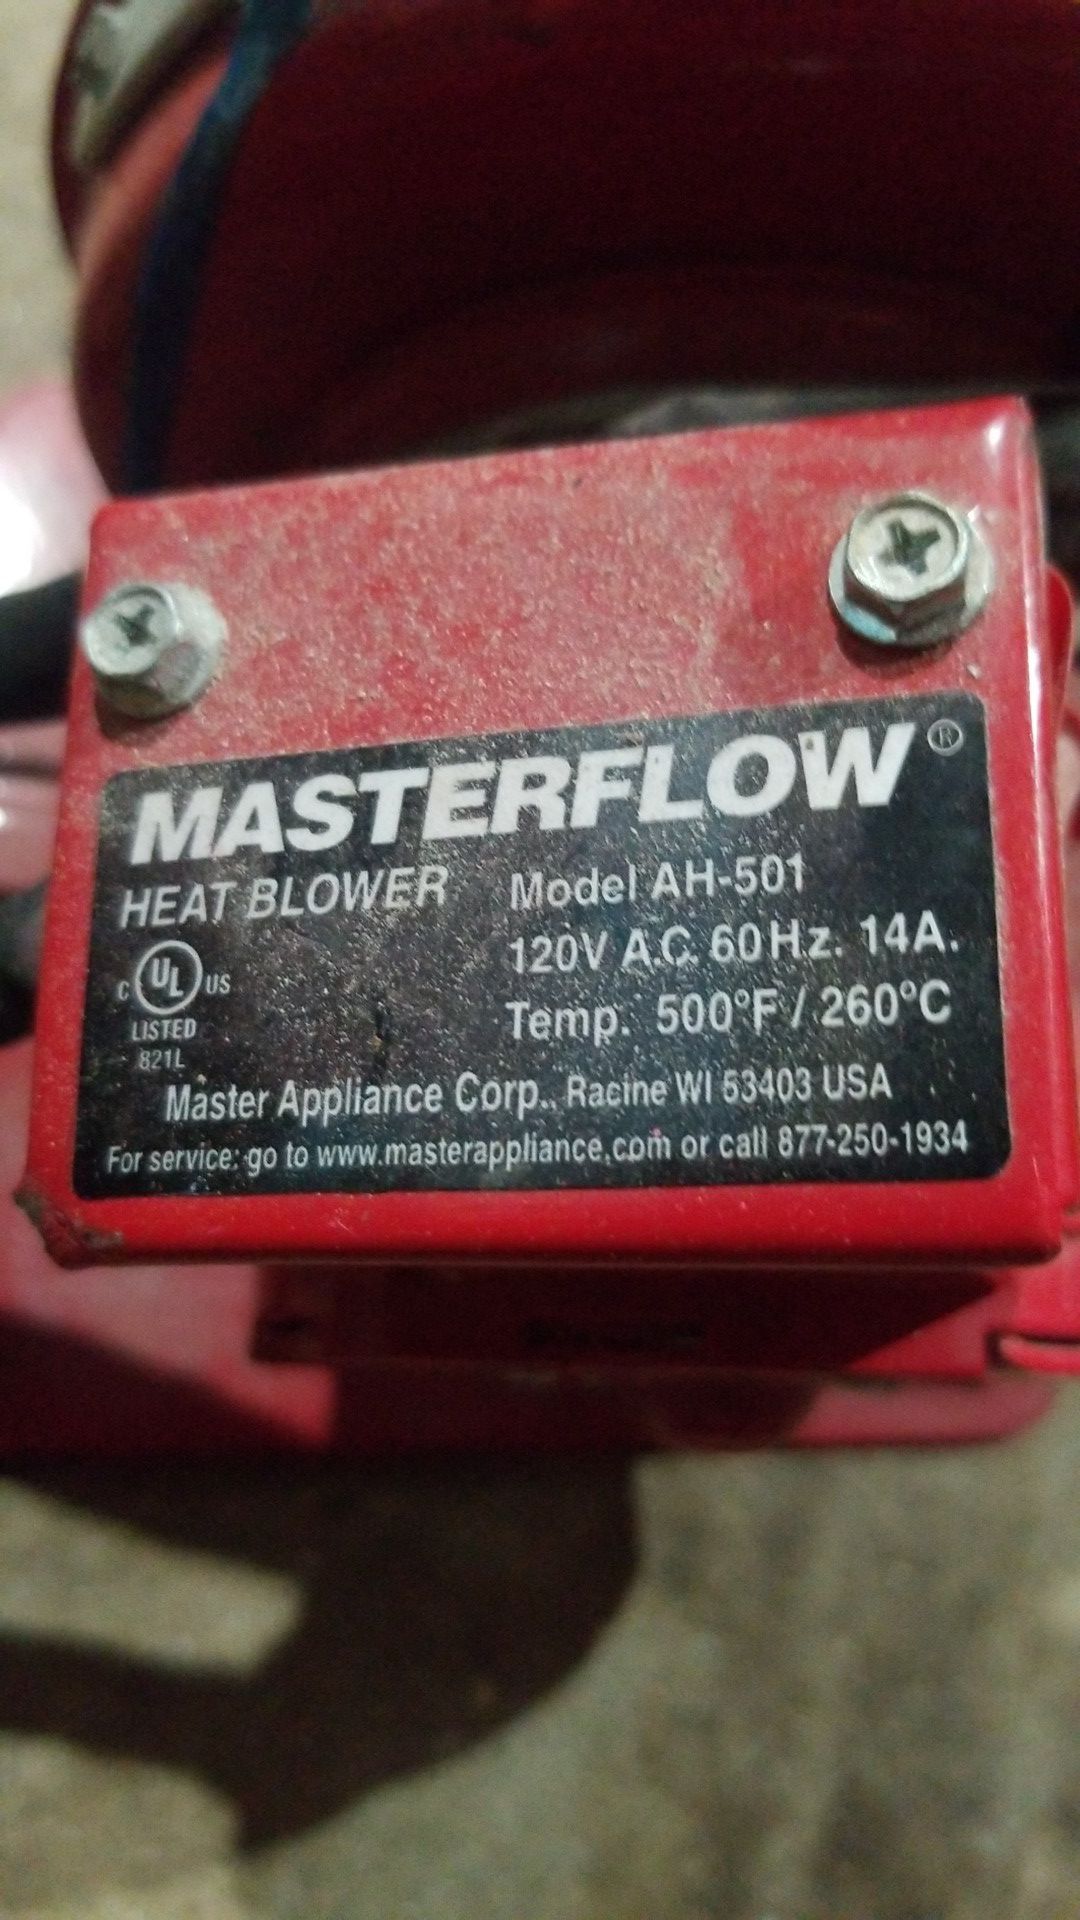 Master Appliance Corp Masterflow Heat Blower 500F 12ov